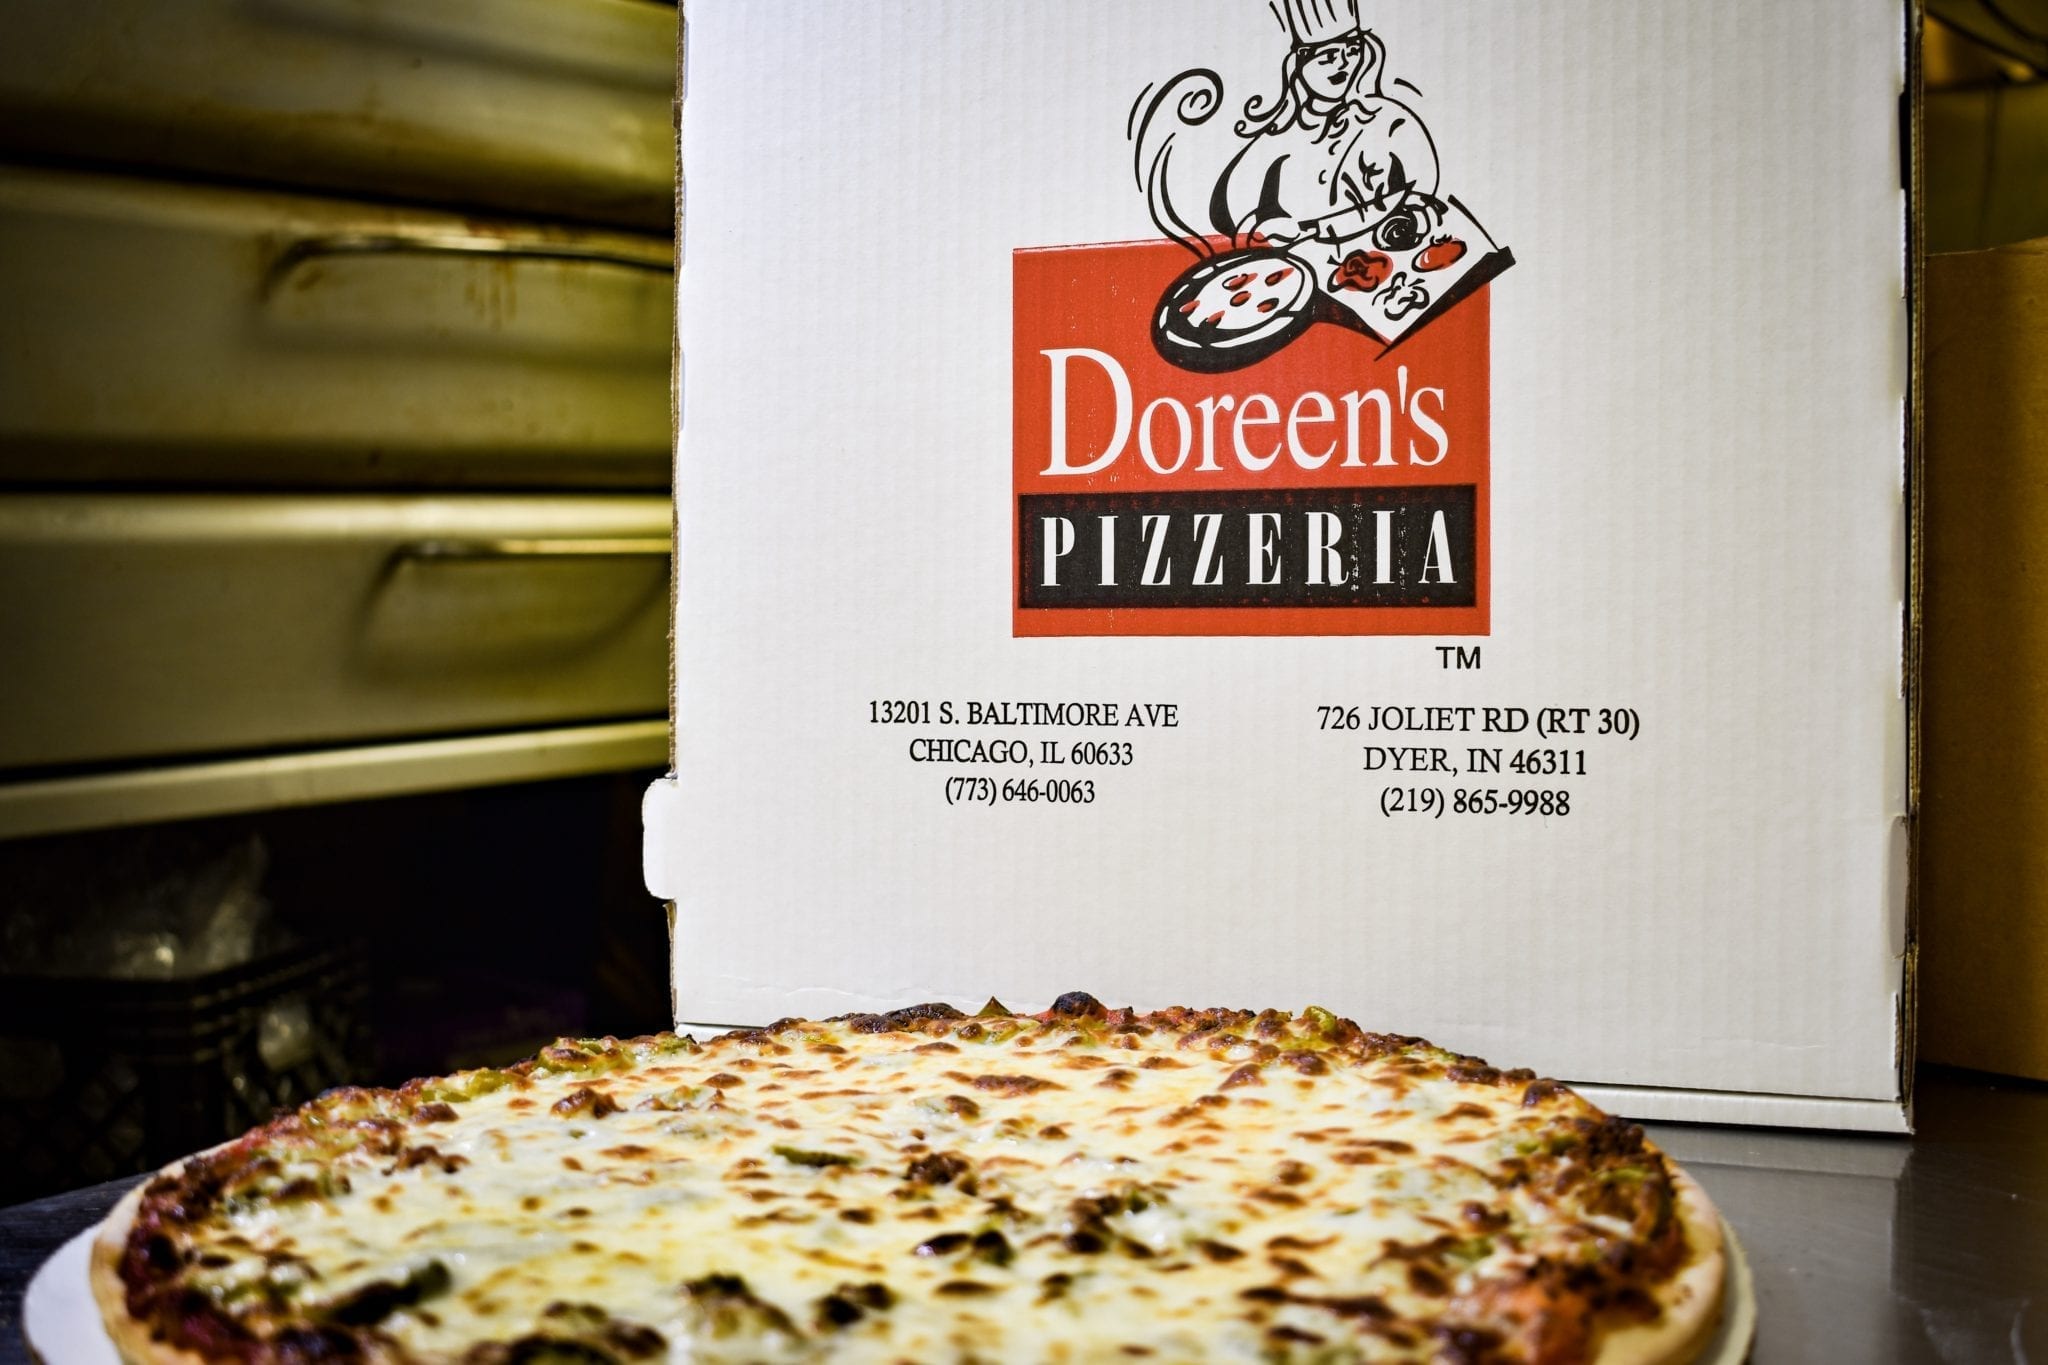 Doreen's Pizzeria - Hawaiian Pizza  Should You Put Pineapples on Pizza? -  Doreen's Pizzeria